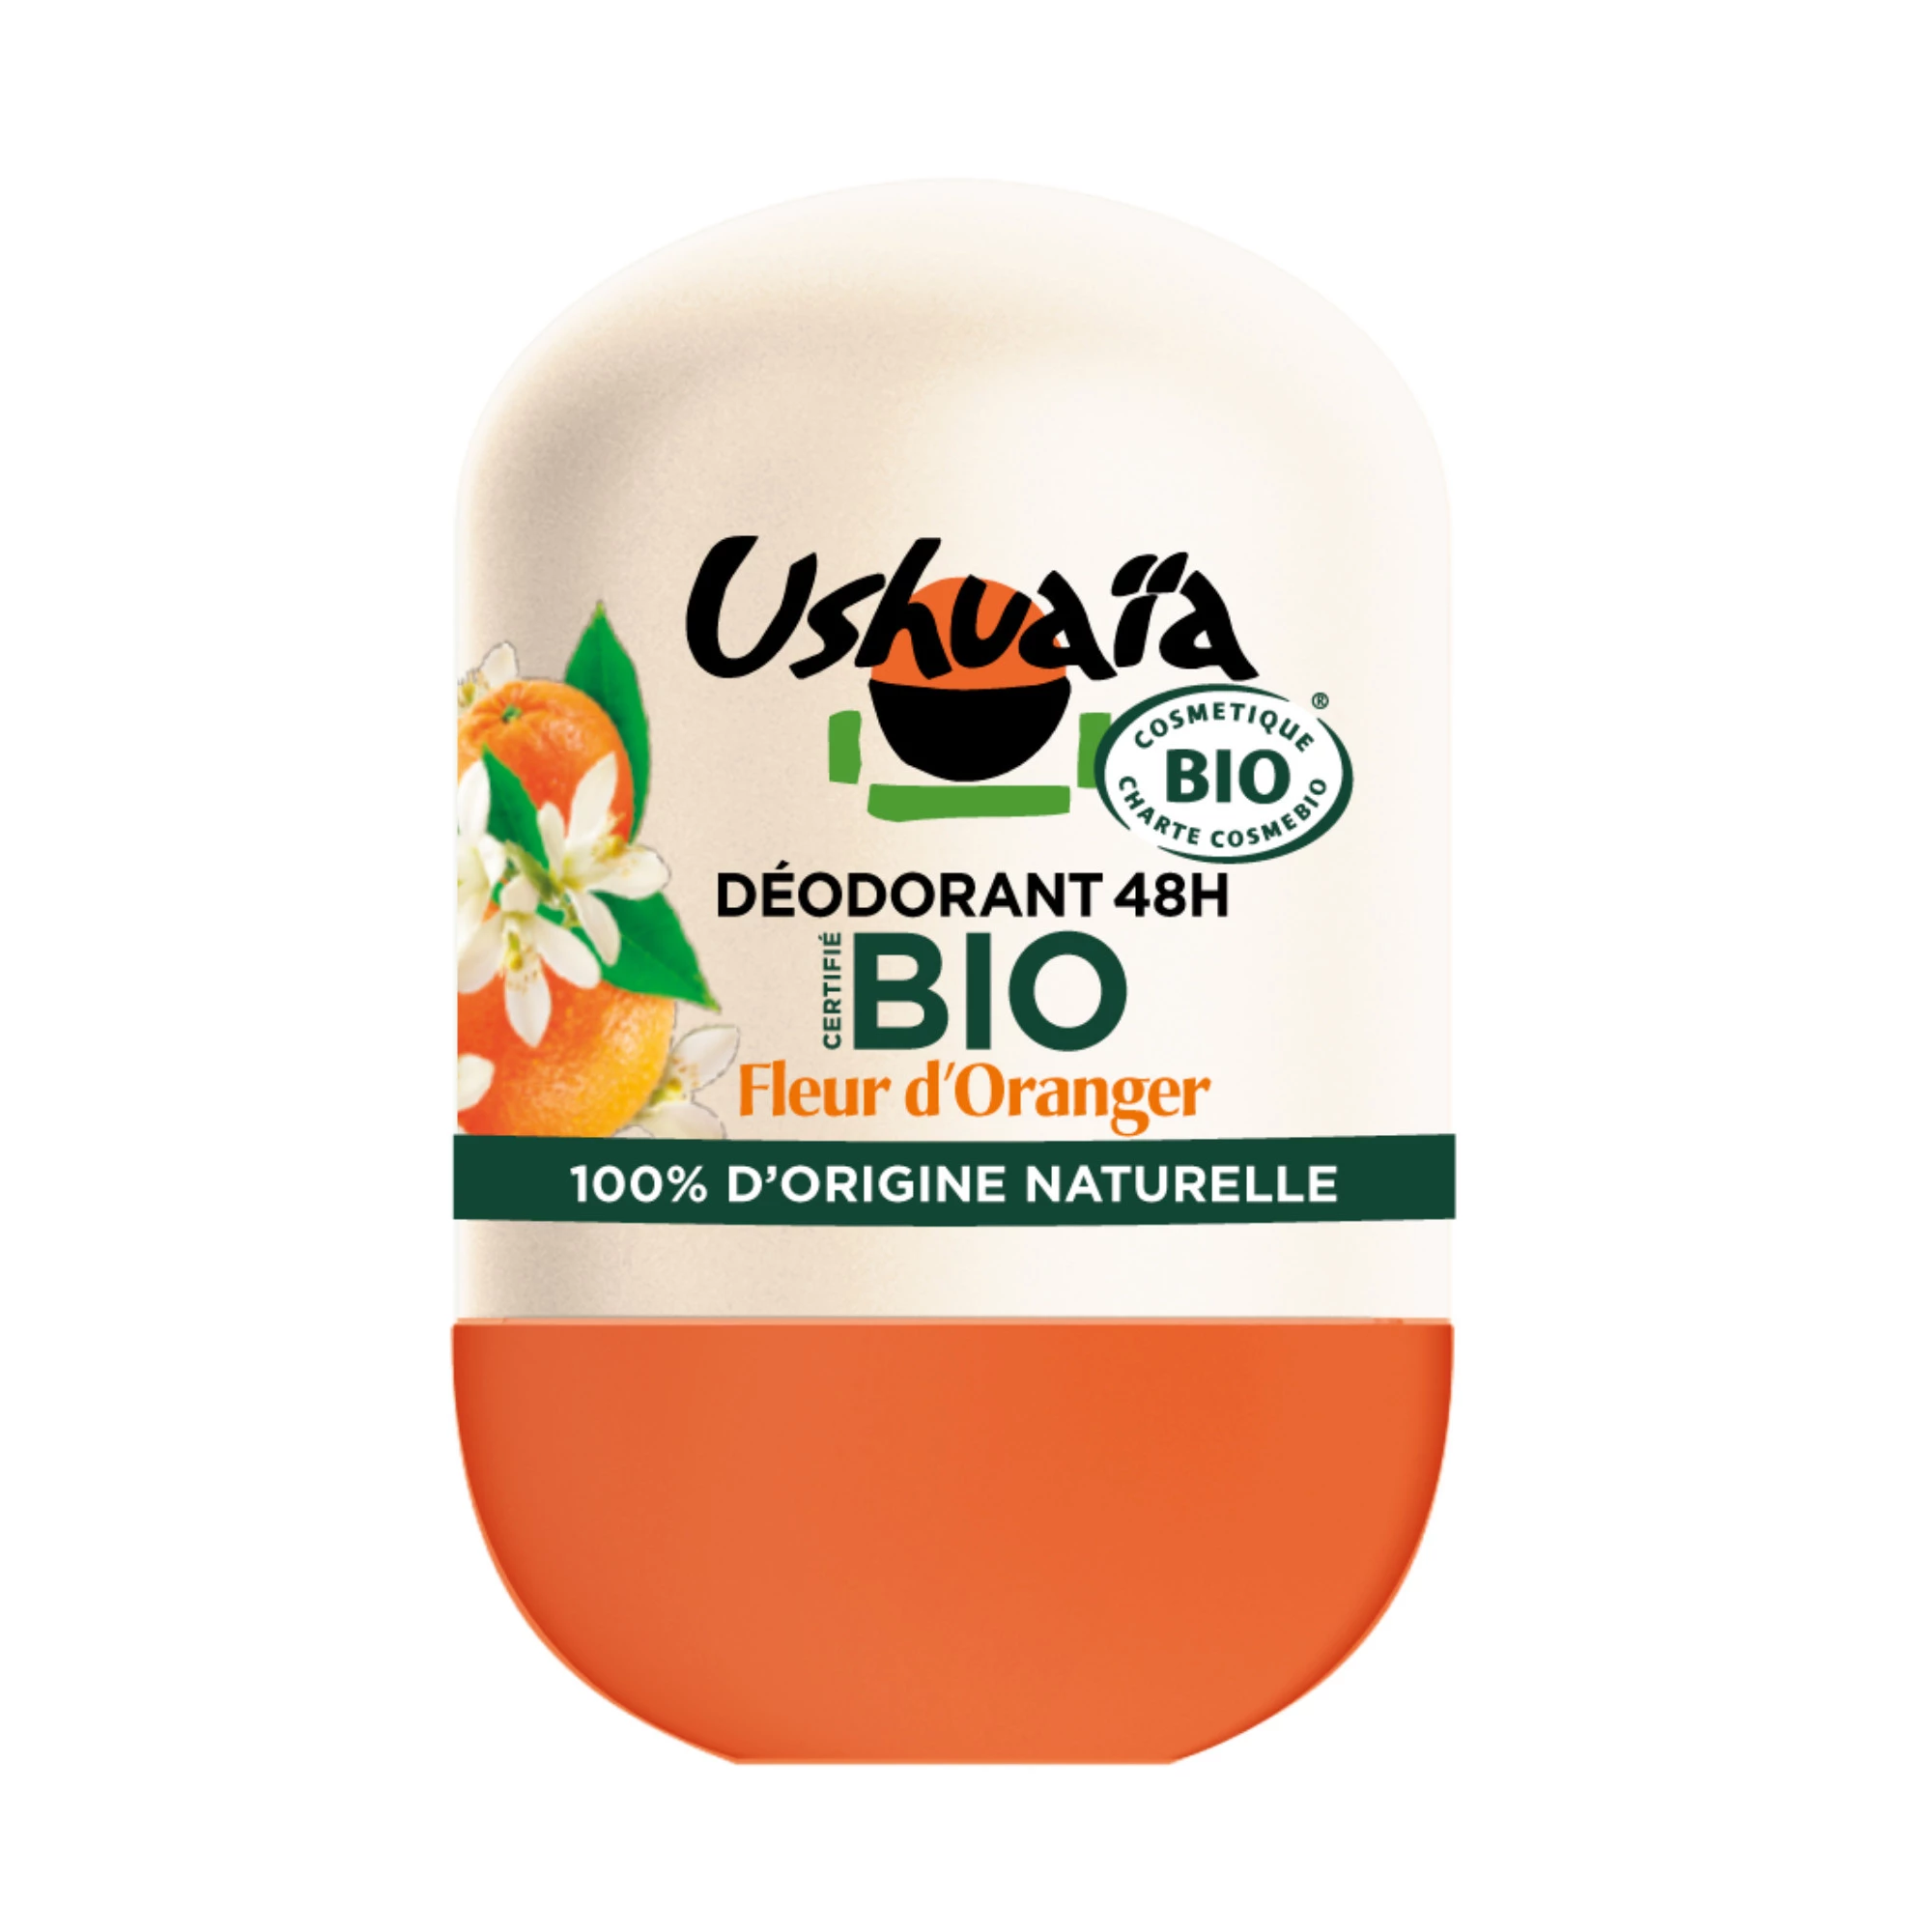 Deodorant bille fleur d'oranger Bio 50ml - USHUAIA